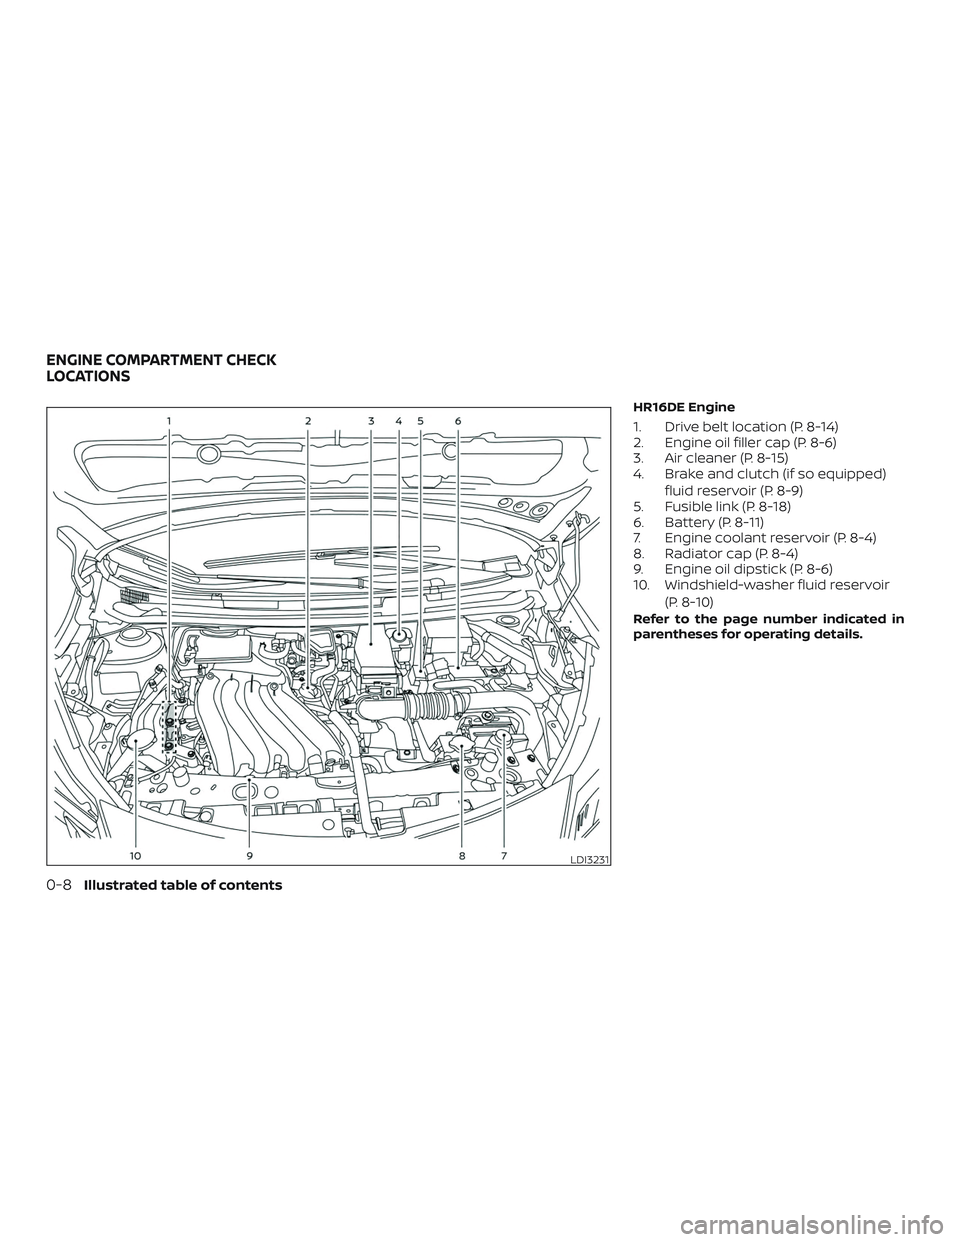 NISSAN MICRA 2018  Owner´s Manual HR16DE Engine
1. Drive belt location (P. 8-14)
2. Engine oil filler cap (P. 8-6)
3. Air cleaner (P. 8-15)
4. Brake and clutch (if so equipped)fluid reservoir (P. 8-9)
5. Fusible link (P. 8-18)
6. Batt